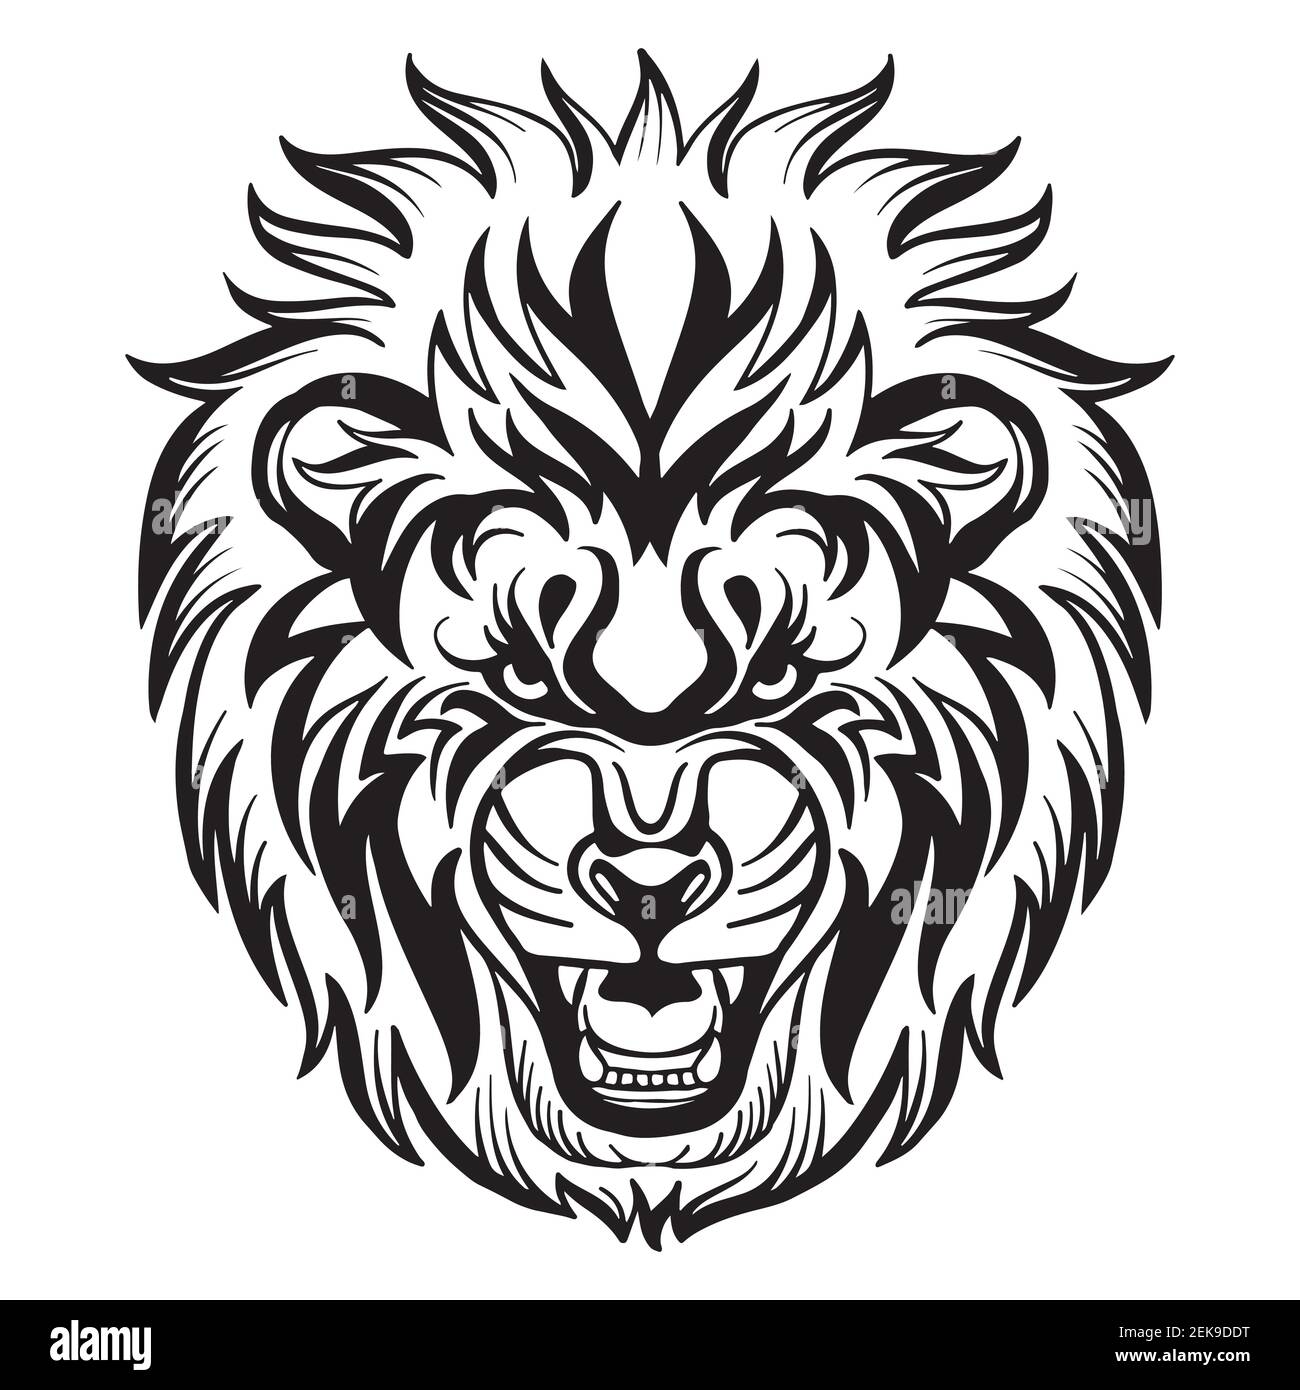 Mascot. Vector head of lion. Black illustration of danger wild cat isolated on white background. For decoration, print, design, logo, sport clubs, tat Stock Vector